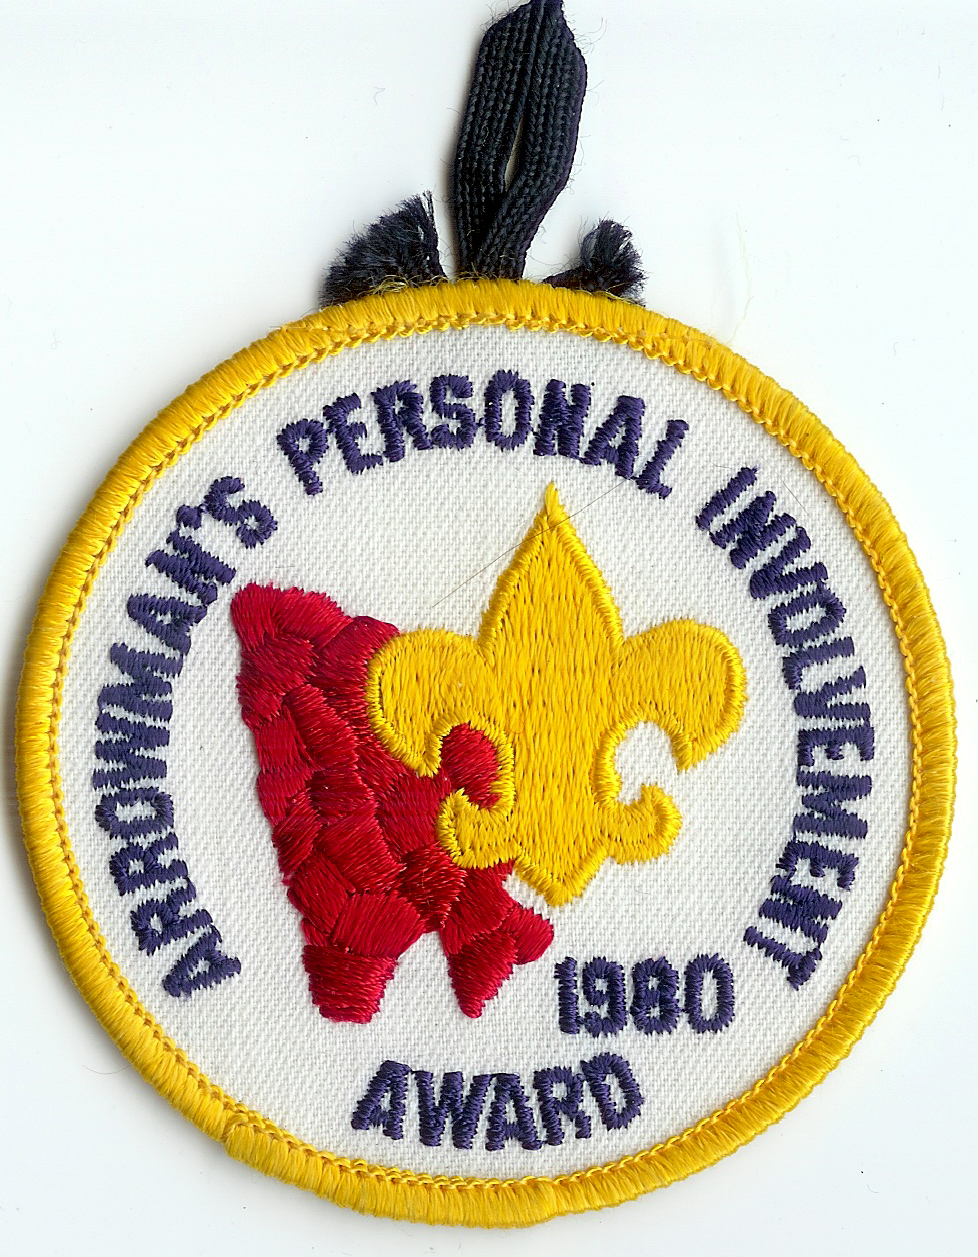 1980 OA Award patch